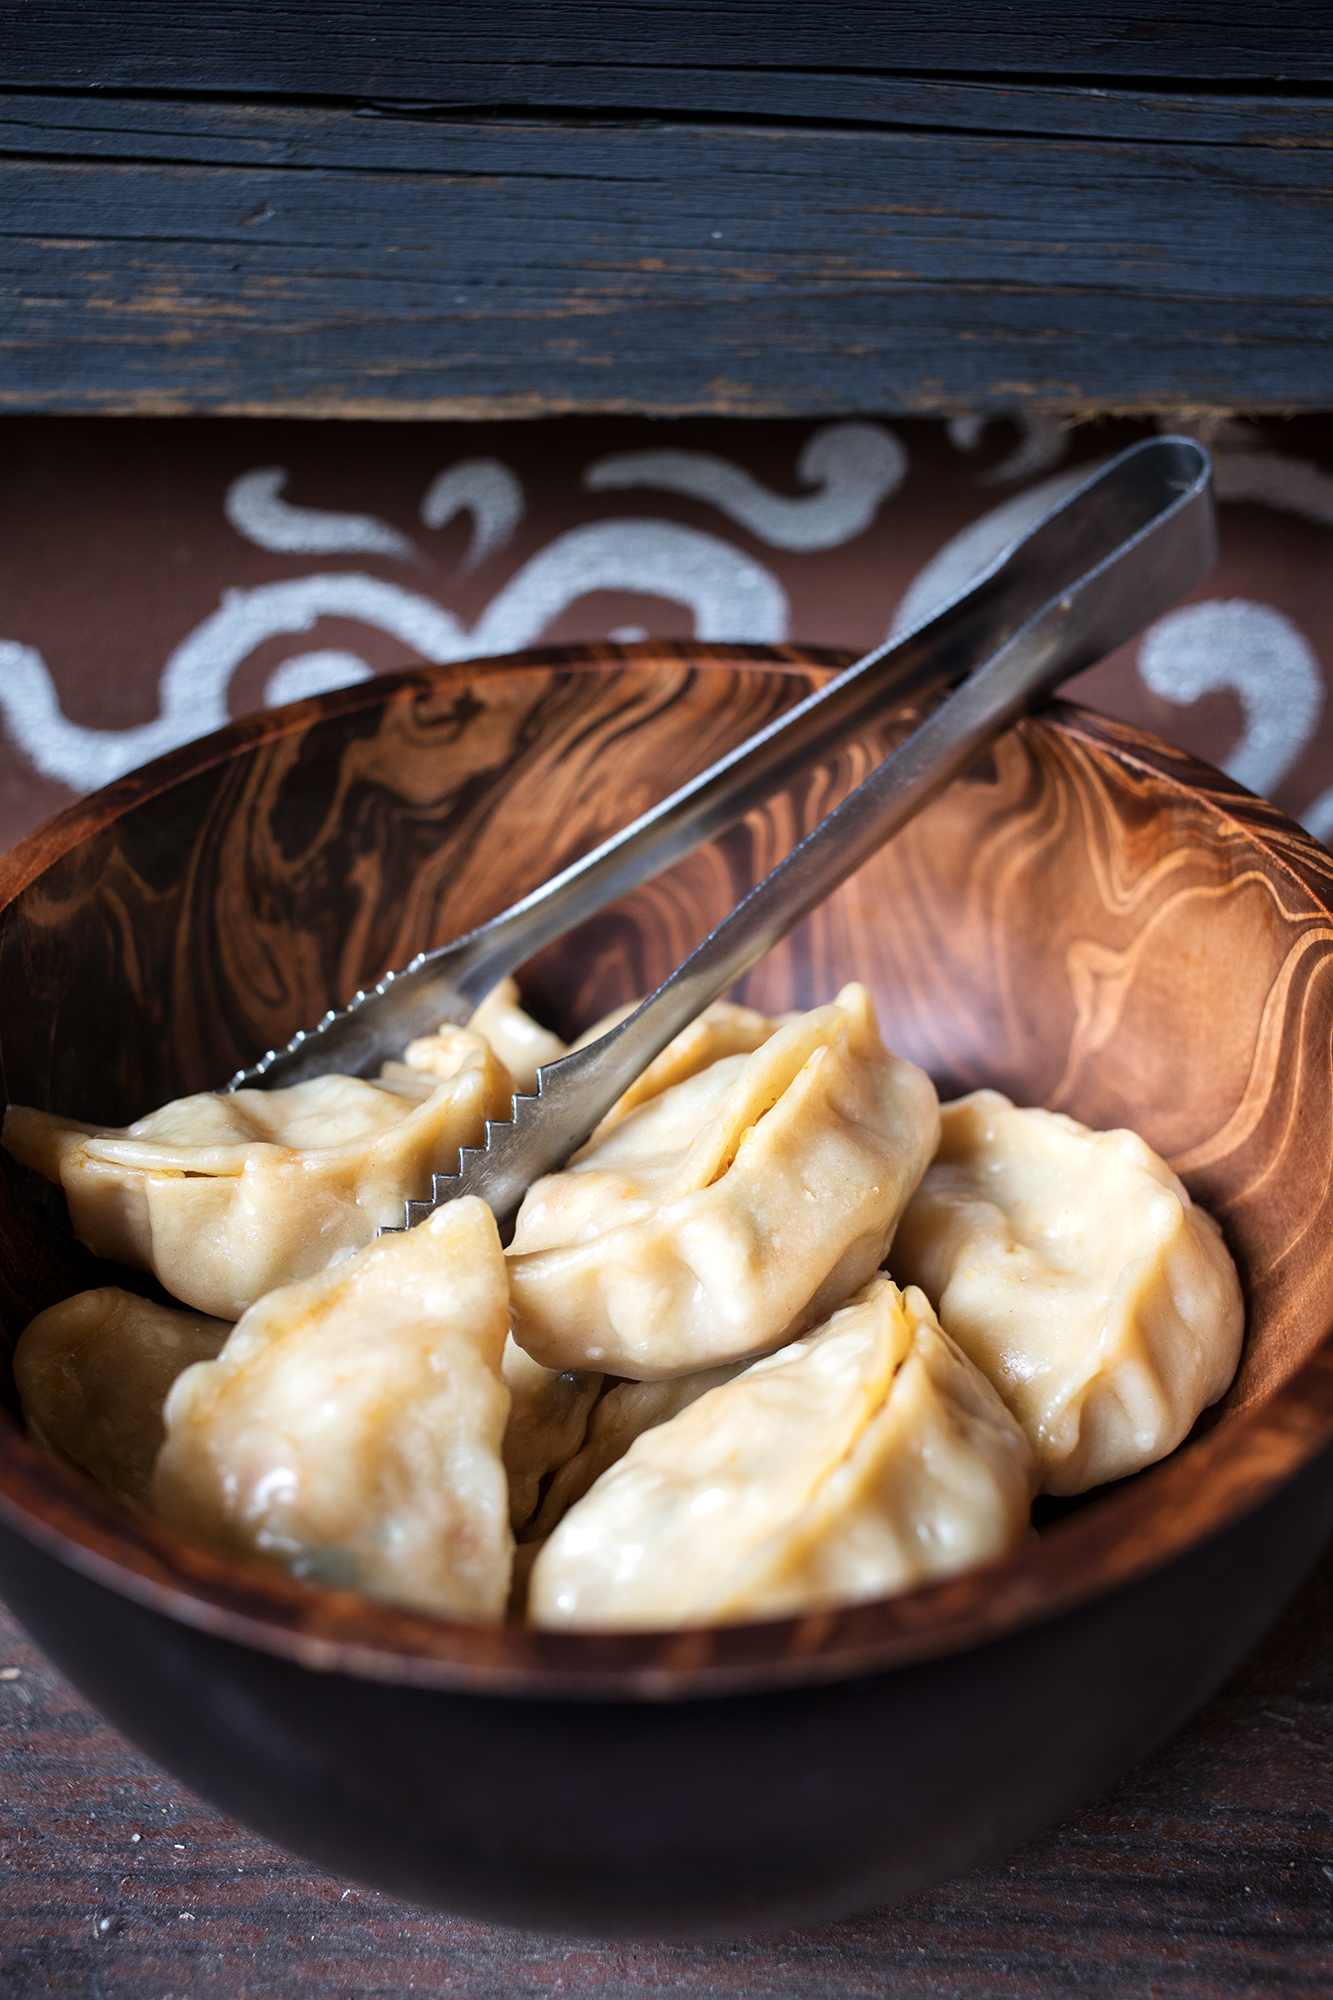 Kewa momo - potato dumpling